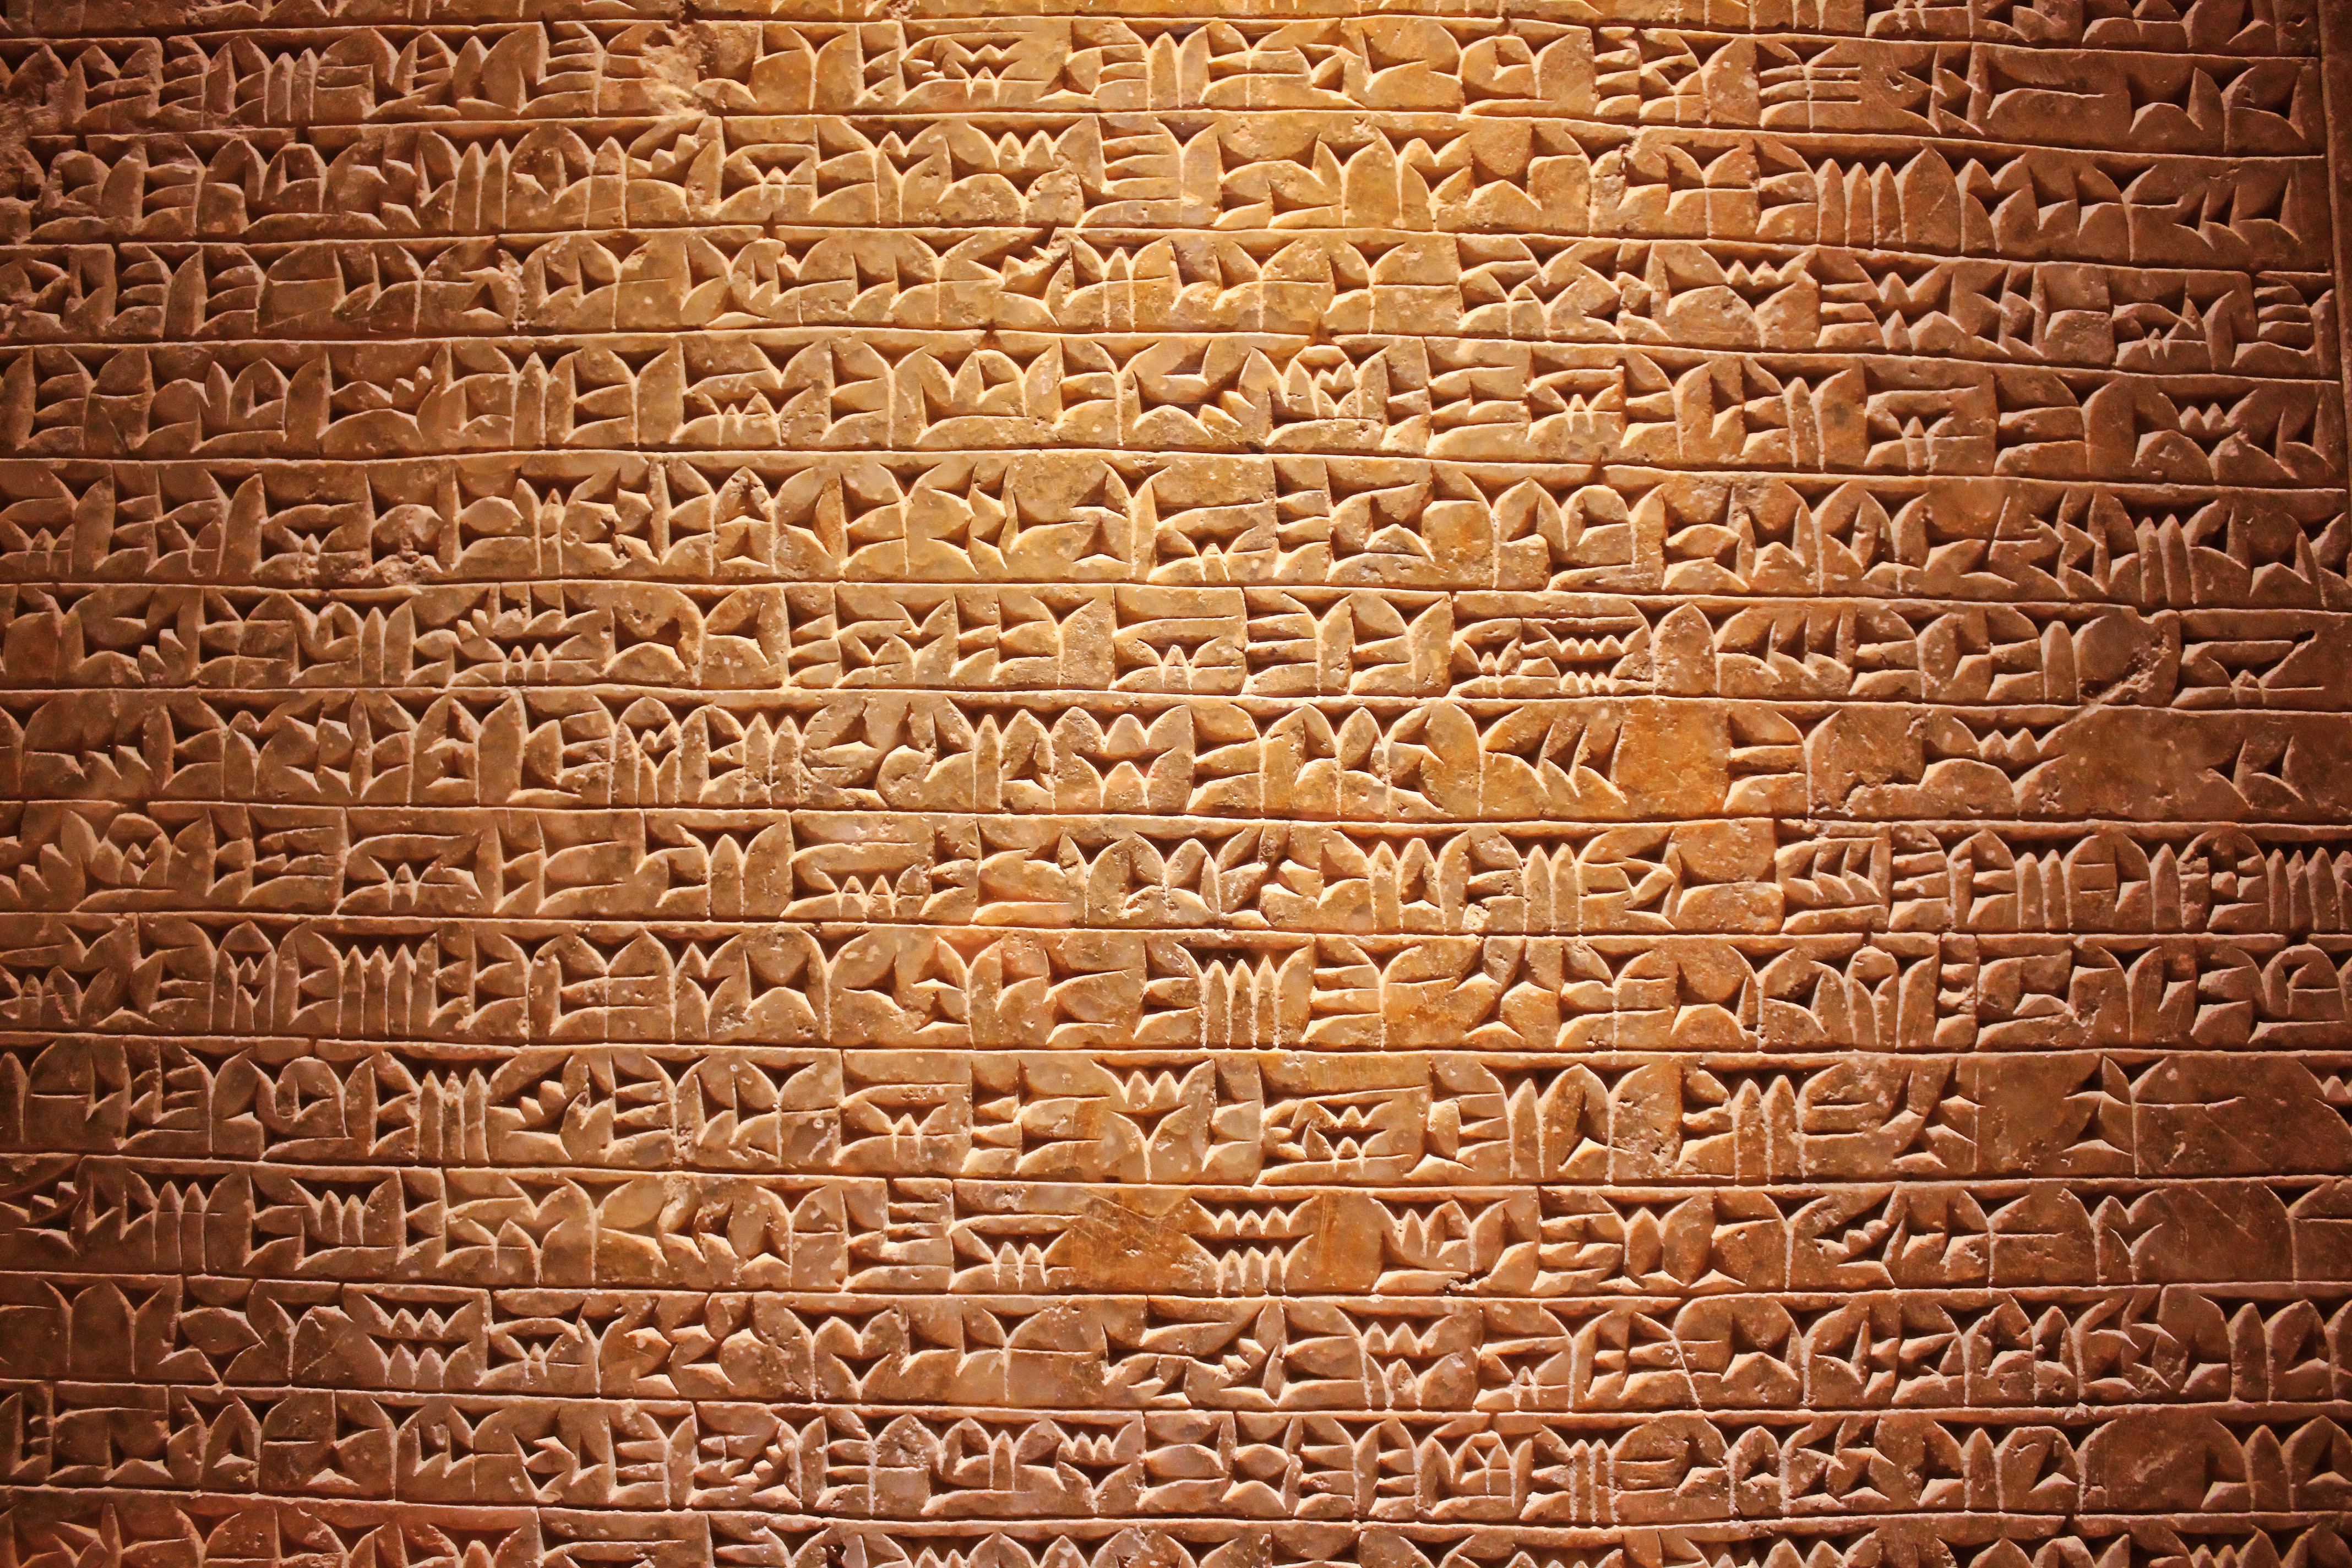 Digitising Iran's cuneiform collection | University of Oxford